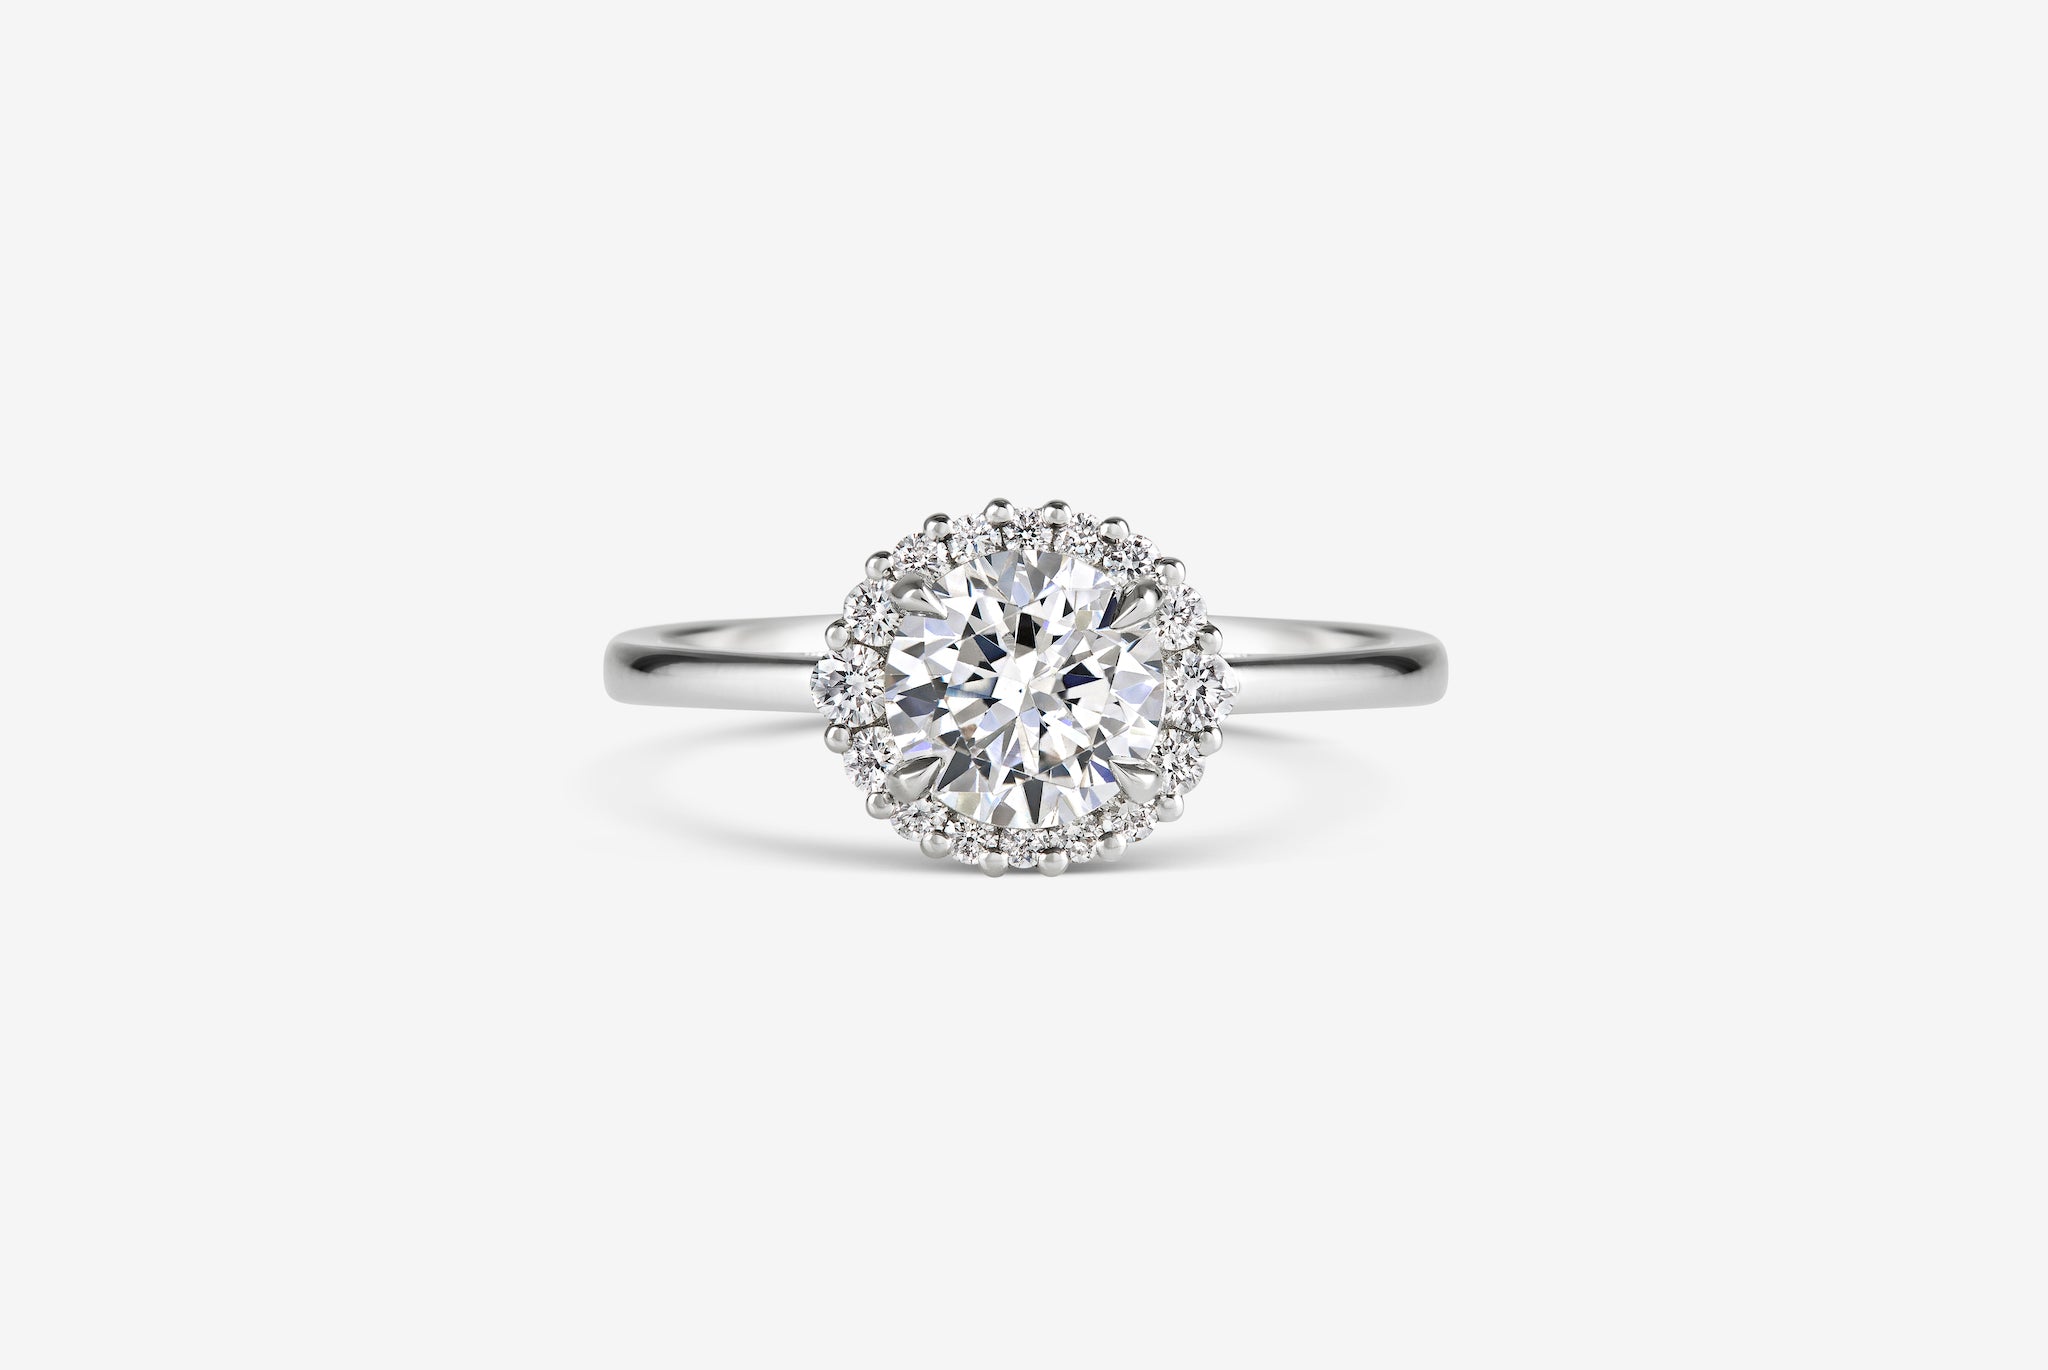 Celeste - White Diamond Halo Engagement Ring